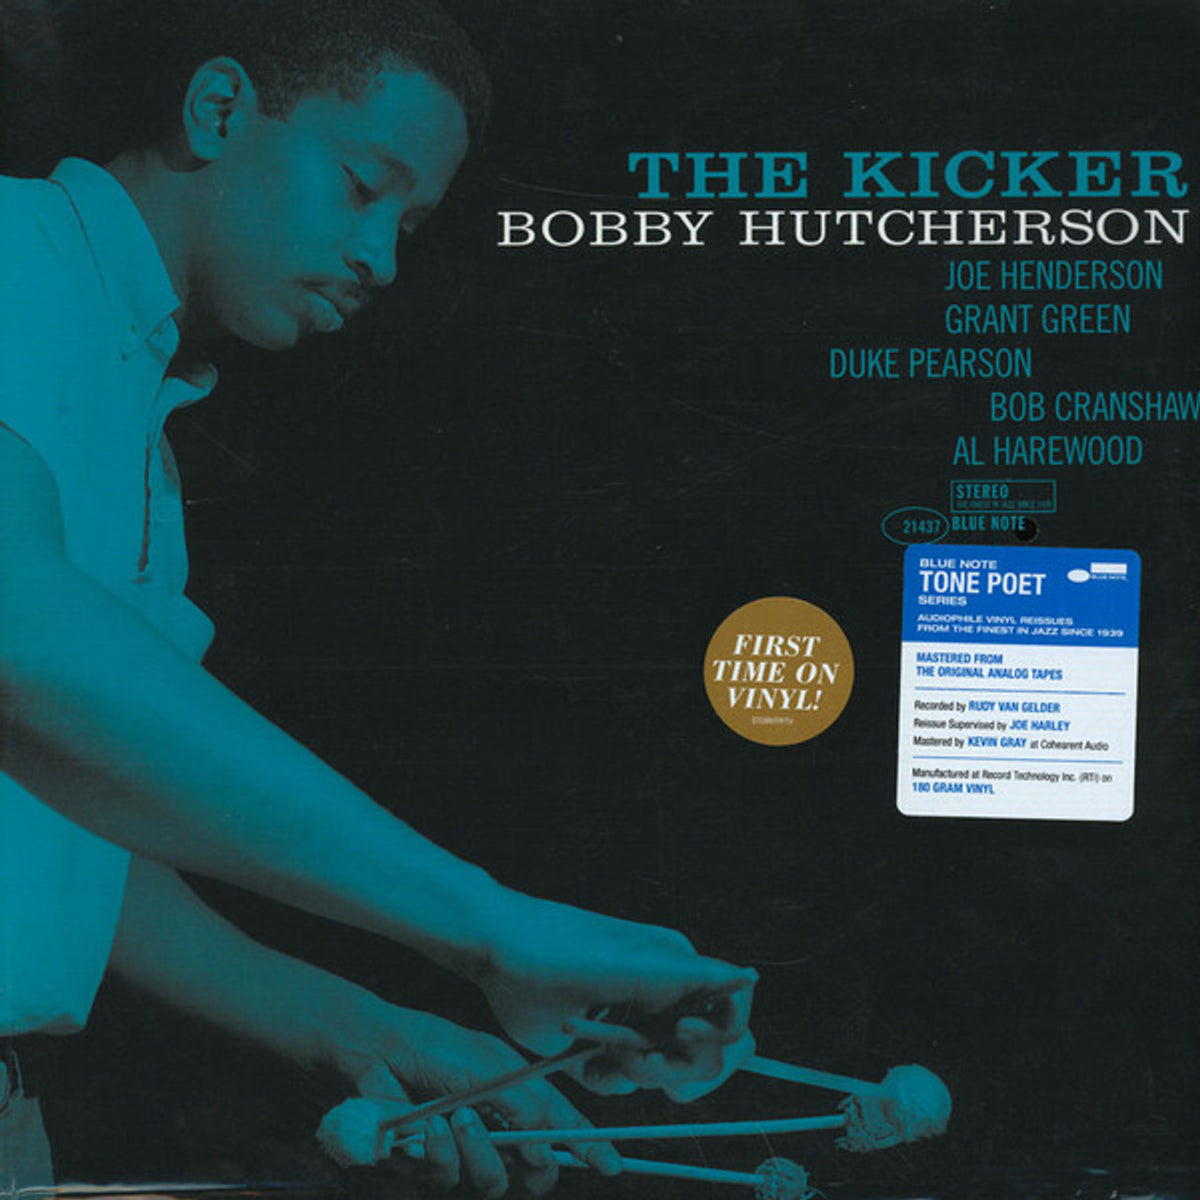 Bobby Hutcherson - The Kicker LP (Blue Note Tone Poet Series, 180 Gram Vinyl)